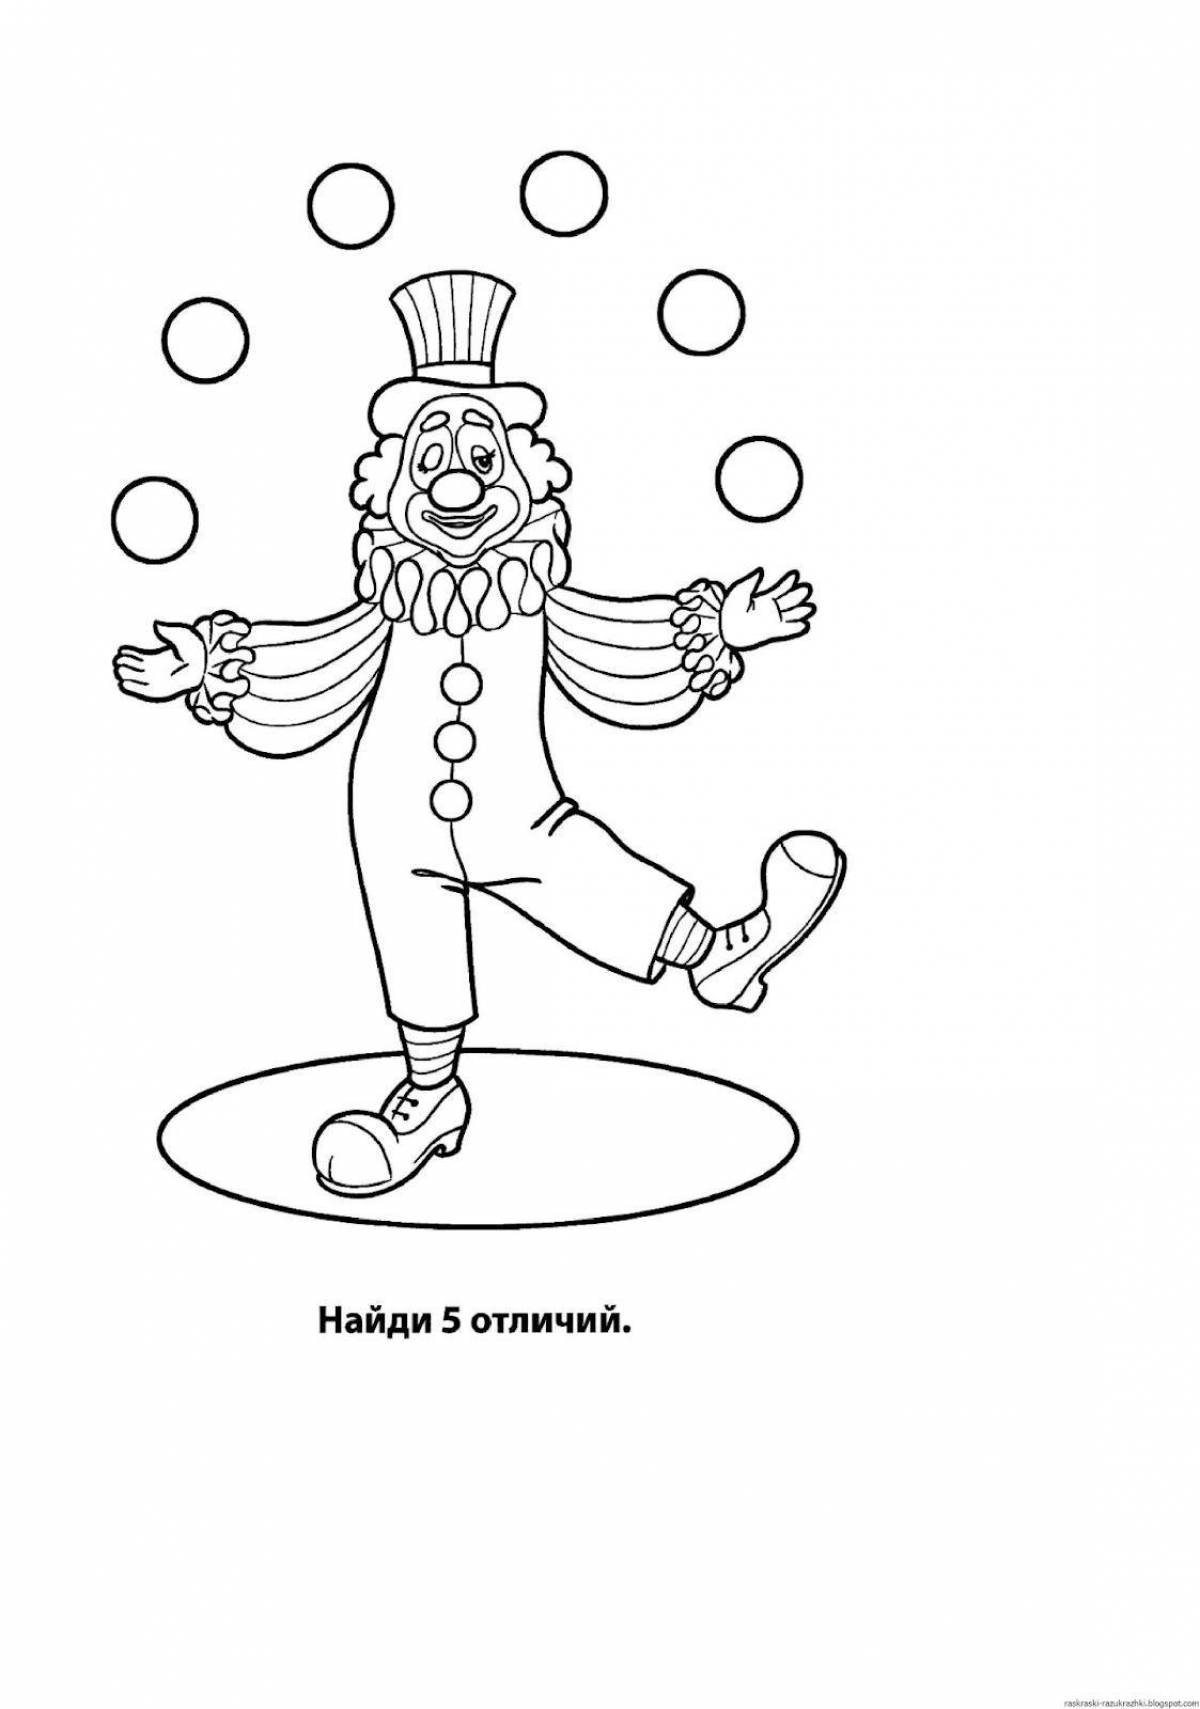 Funny clown coloring for preschoolers